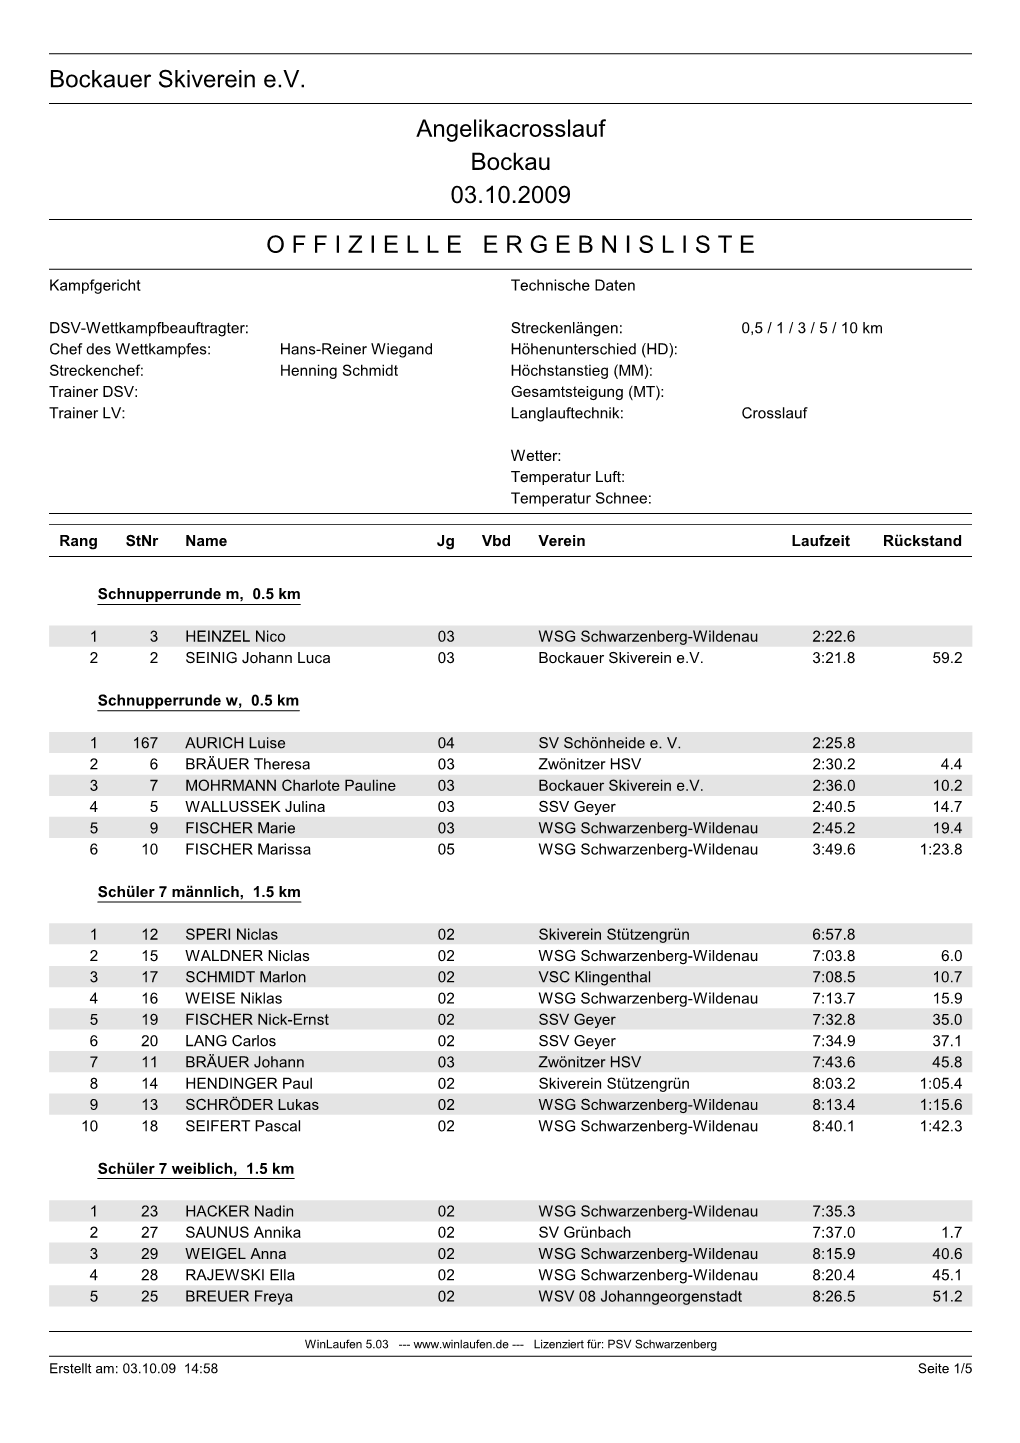 Bockauer Skiverein E.V. Angelikacrosslauf Bockau 03.10